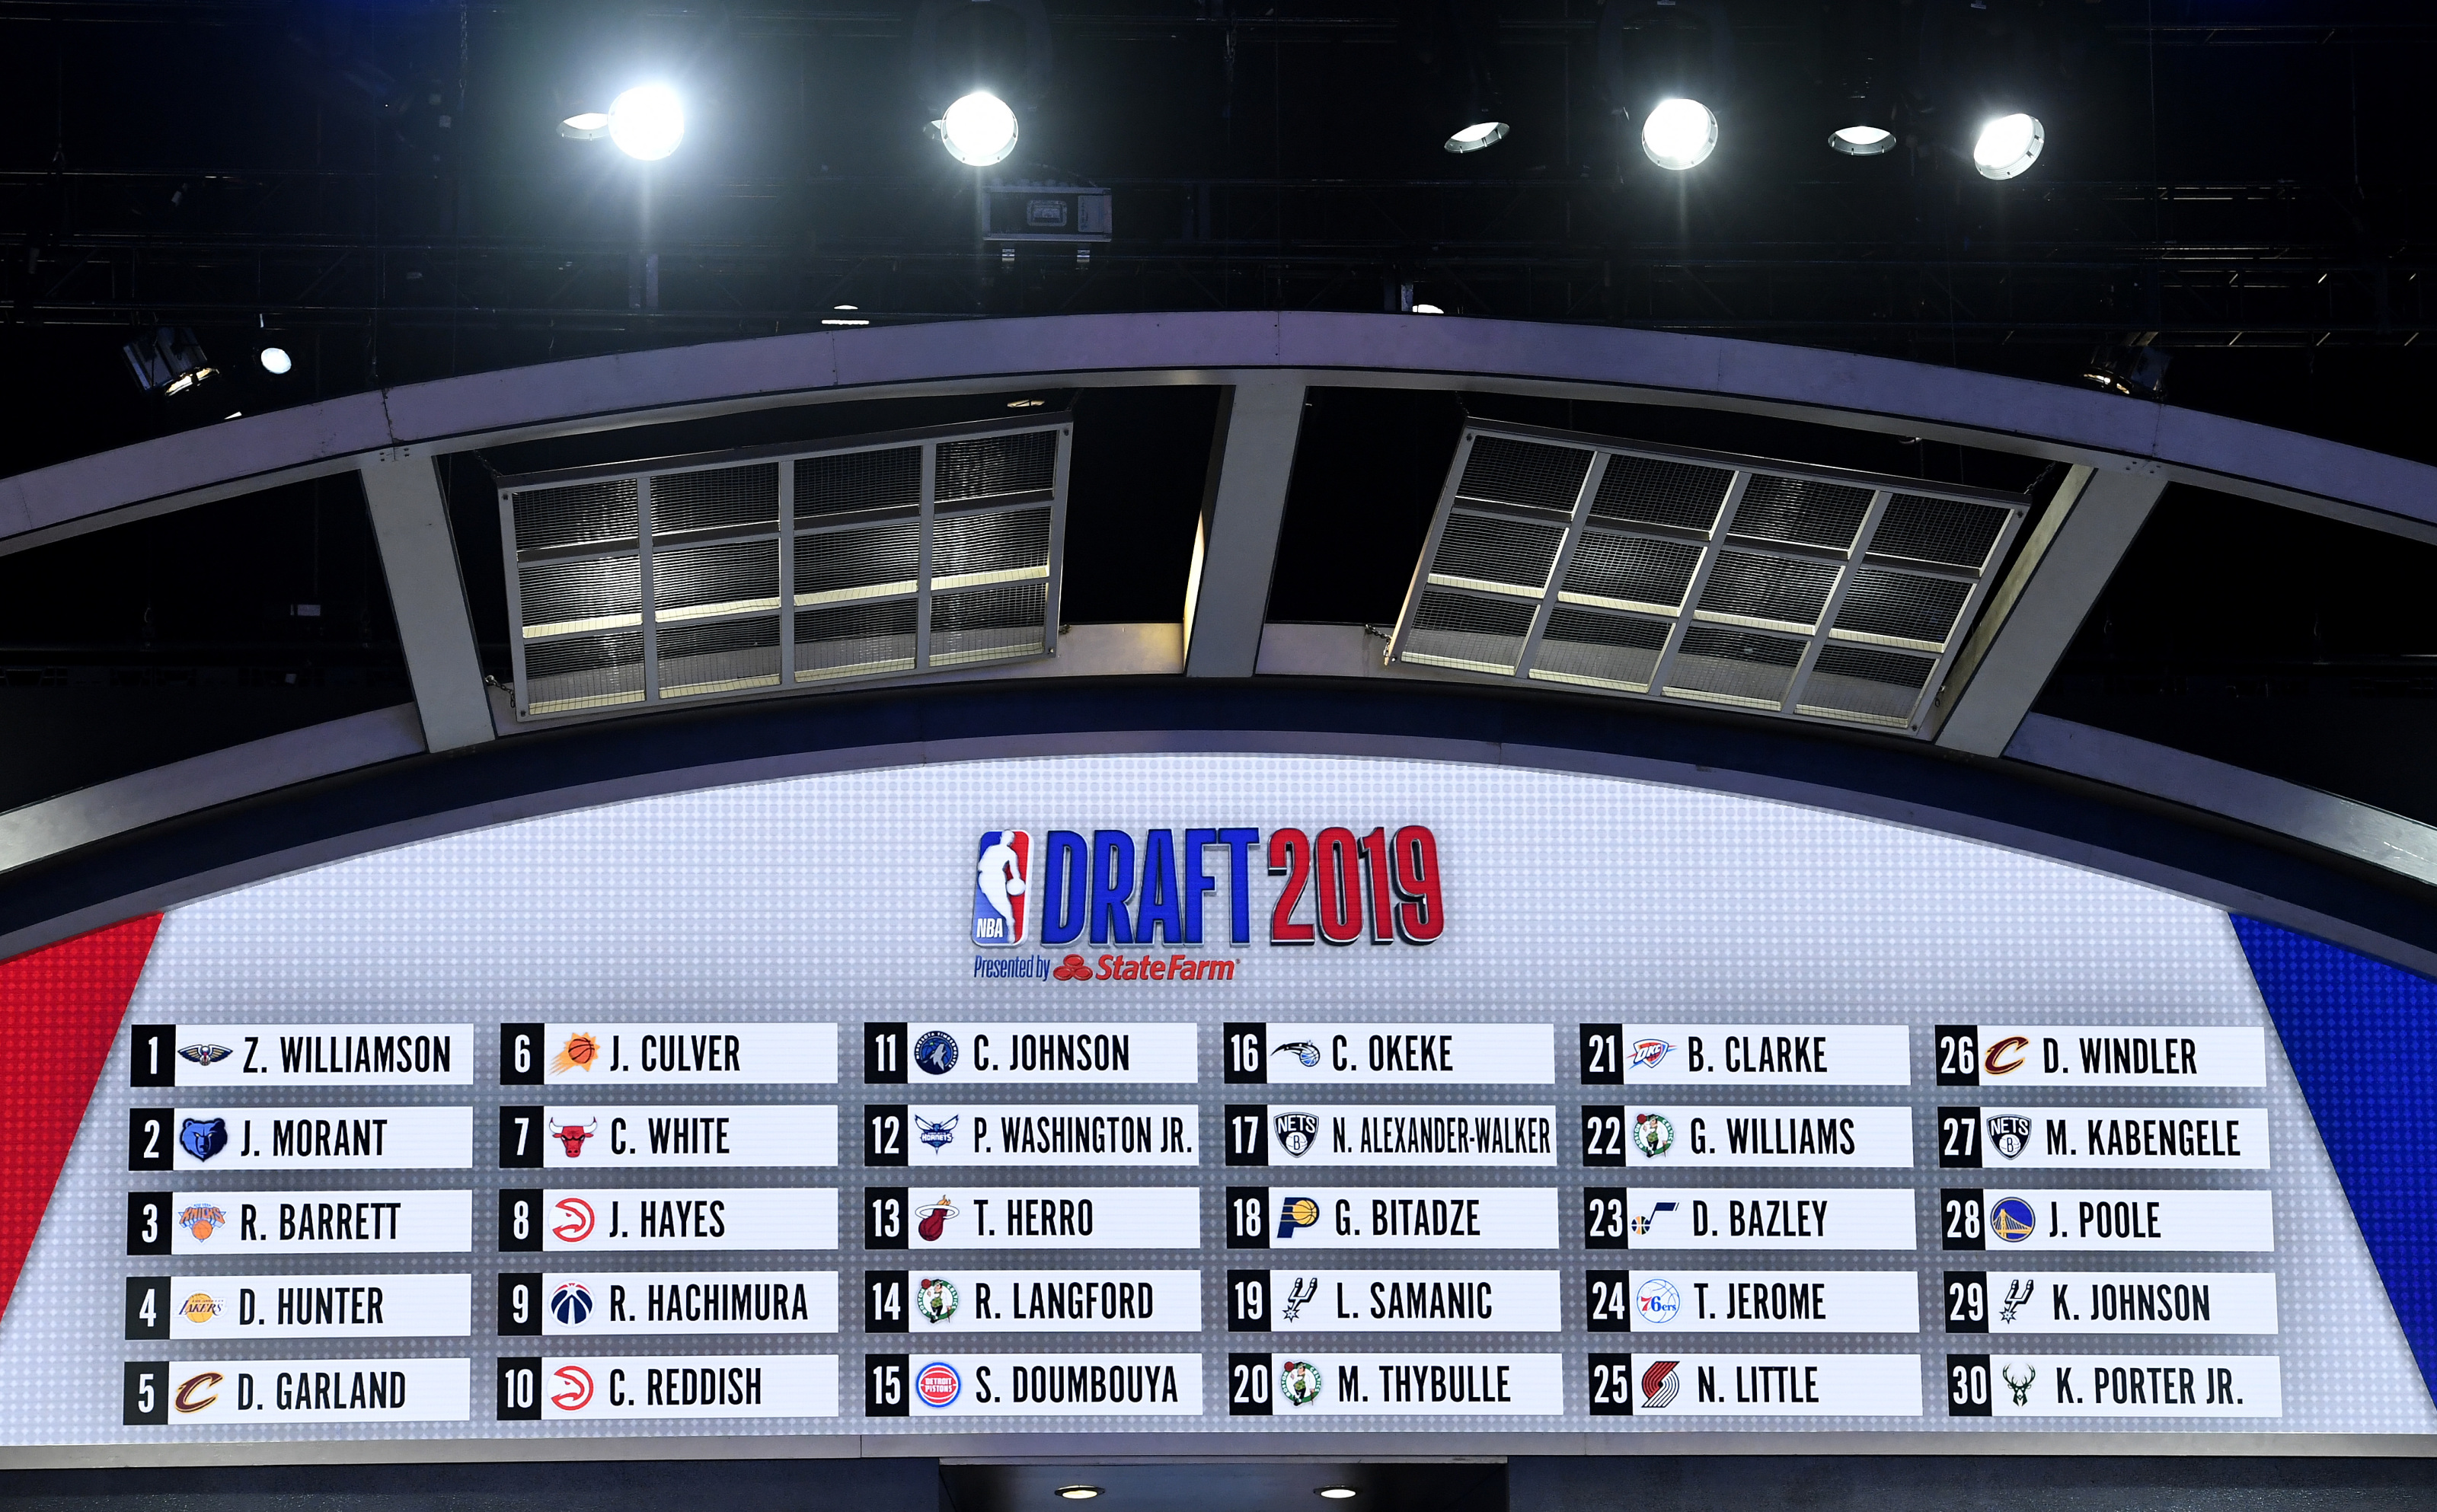 NY Knicks taking notes on NBA Draft combine measurements